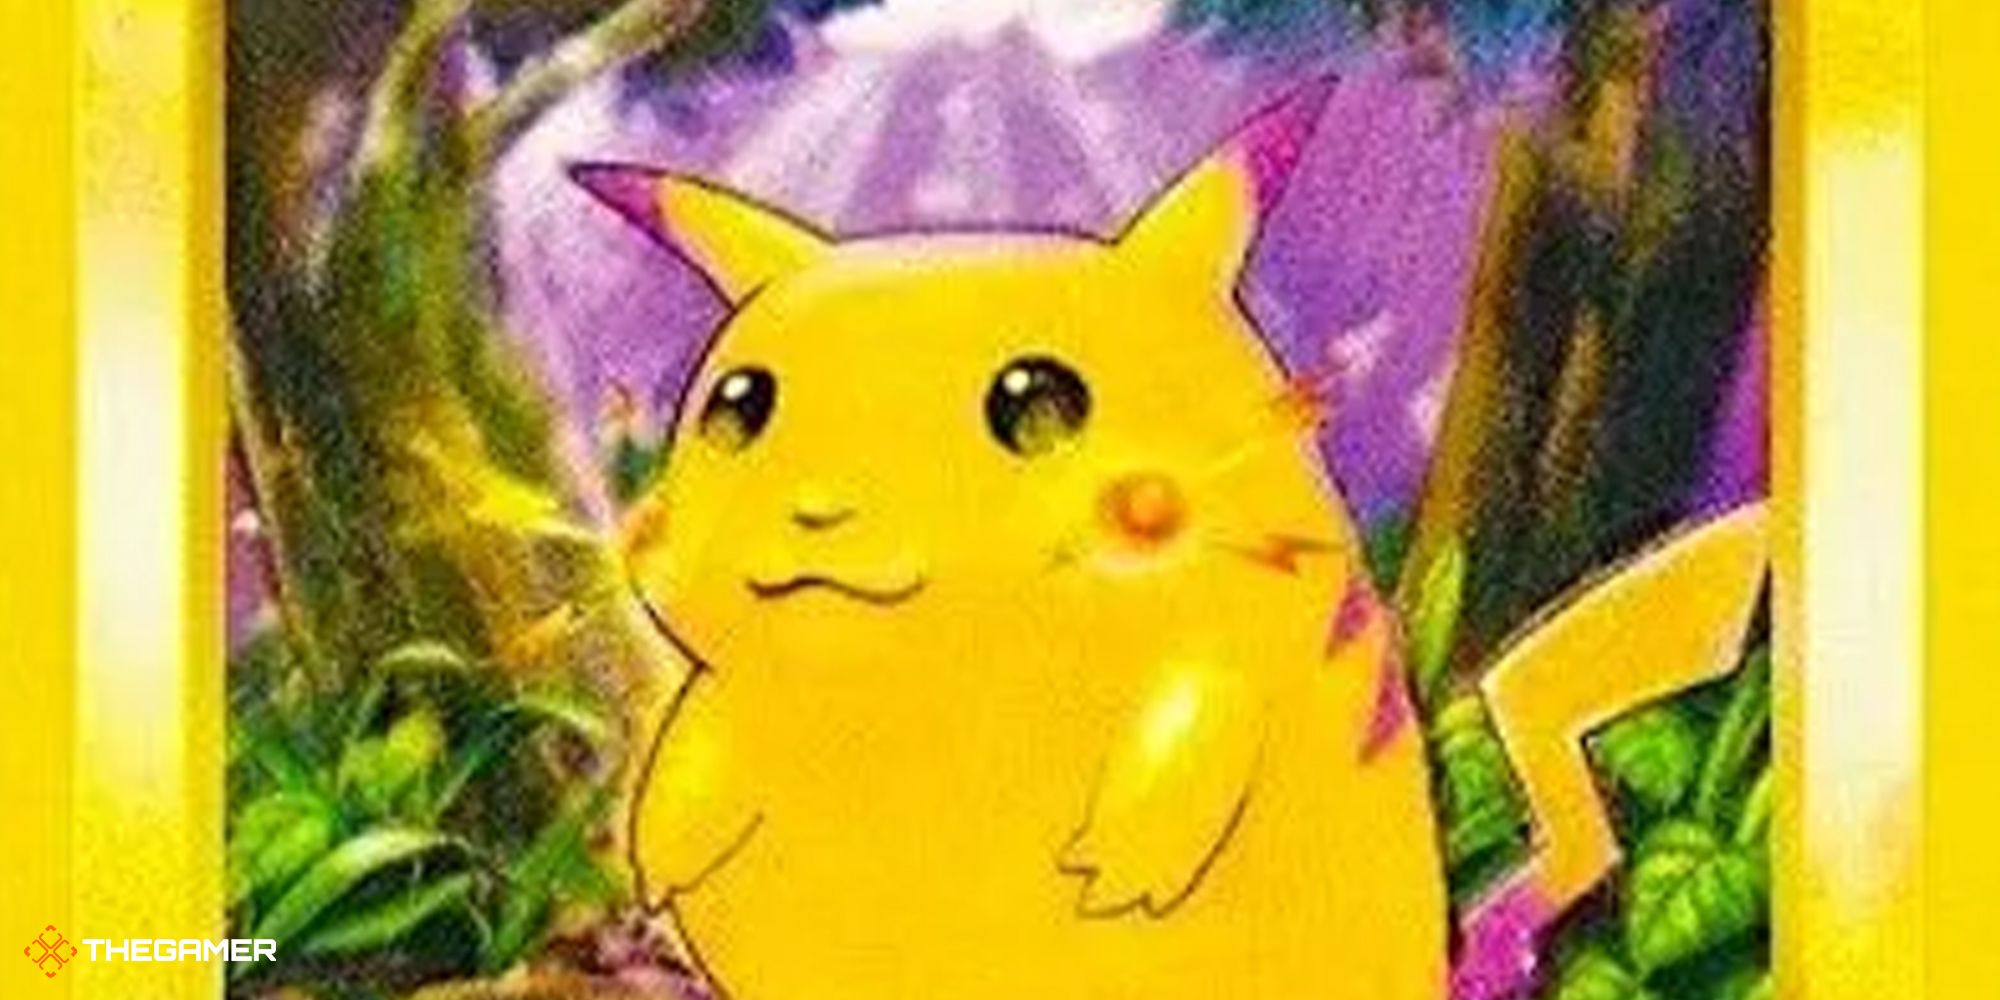 Pokemon TCG - Pikachu misprint with red cheeks